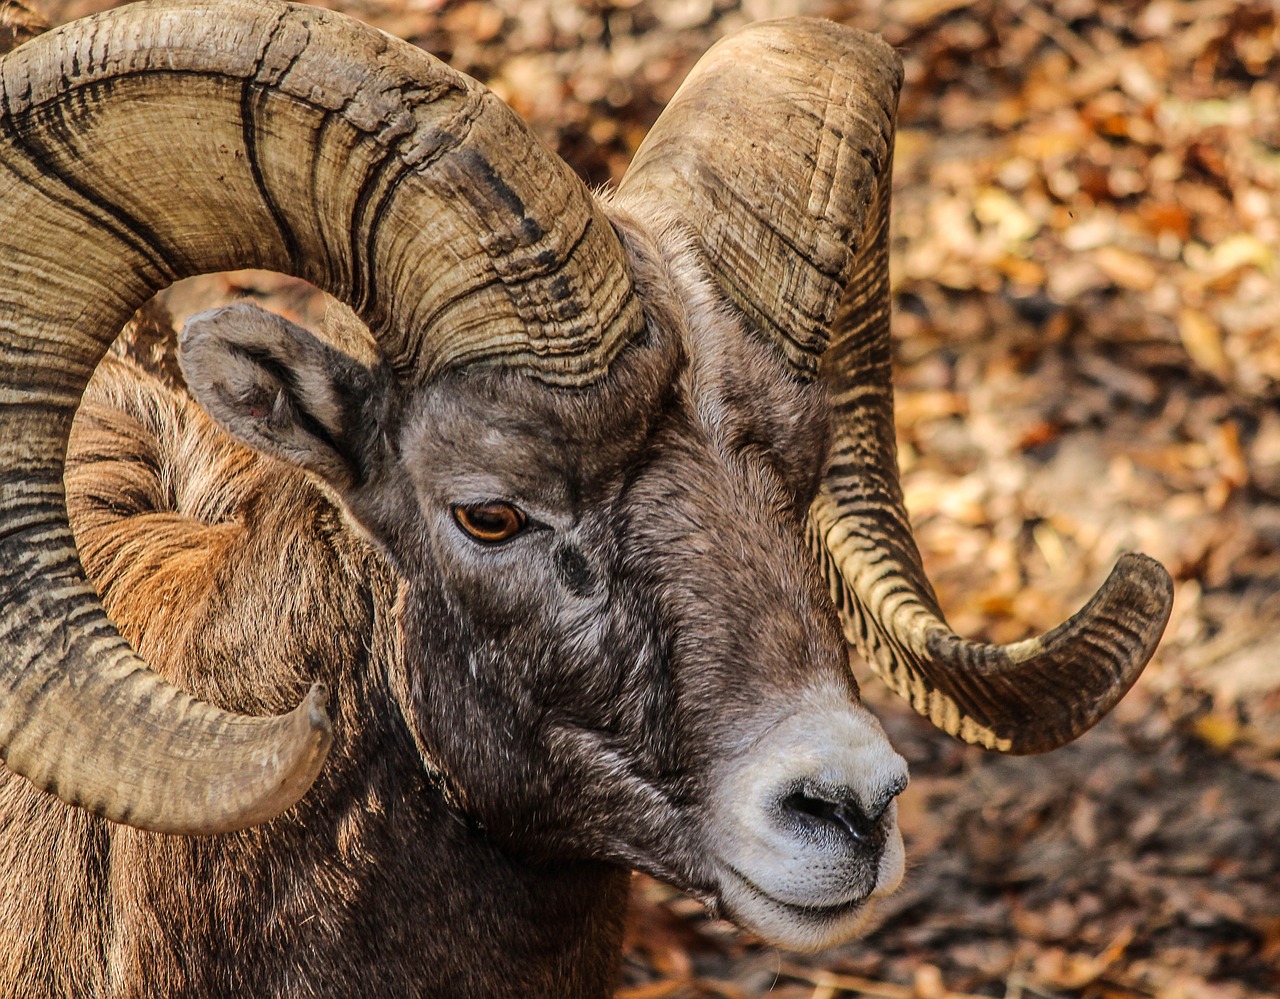 Ram vs Bull